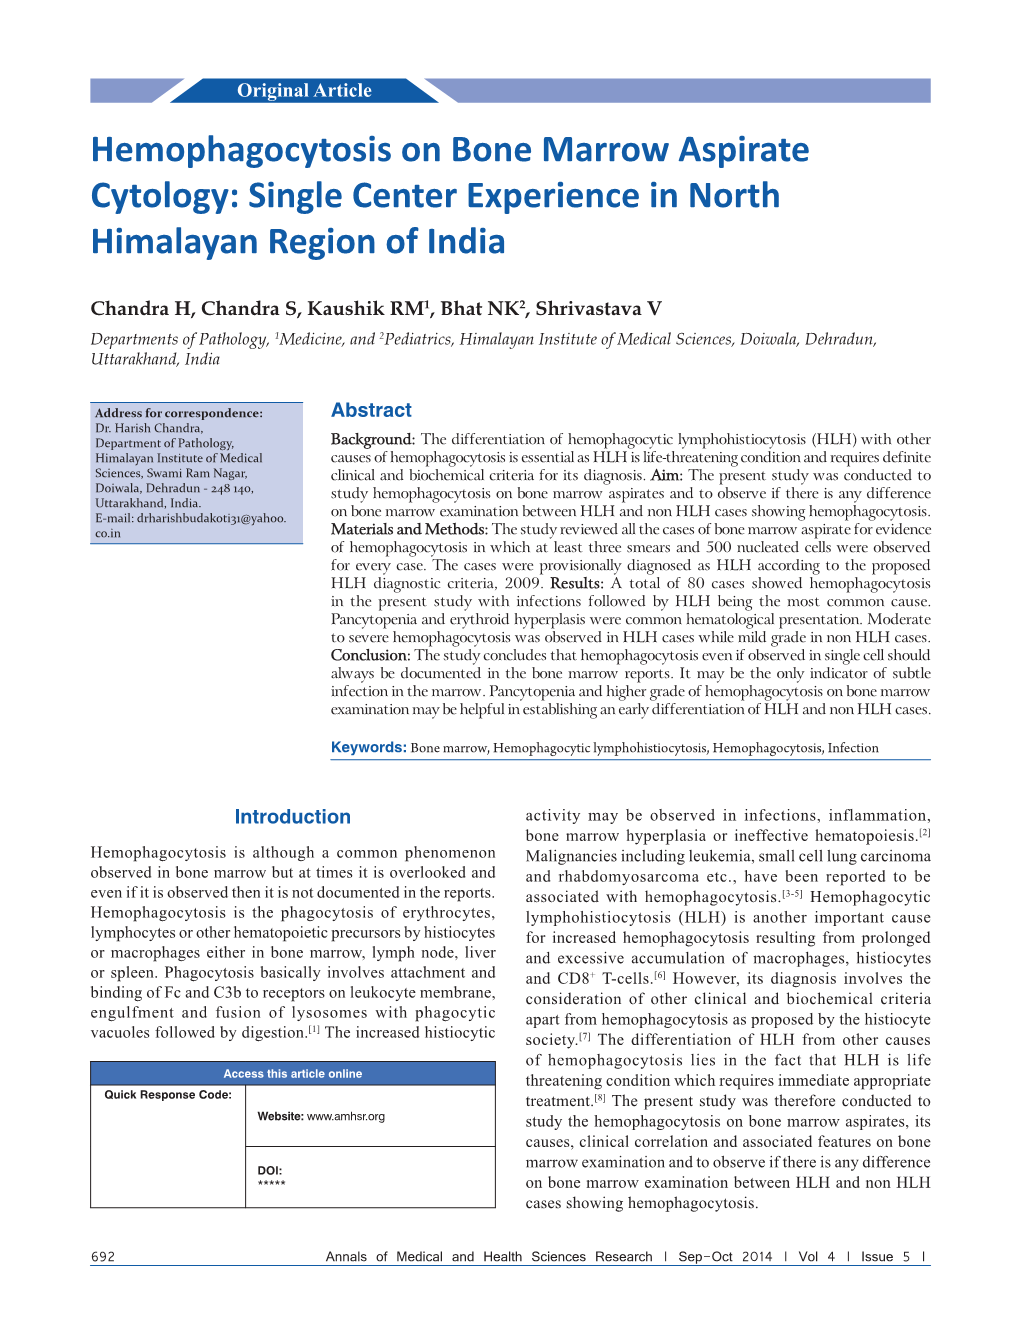 Hemophagocytosis on Bone Marrow Aspirate Cytology: Single Center Experience in North Himalayan Region of India